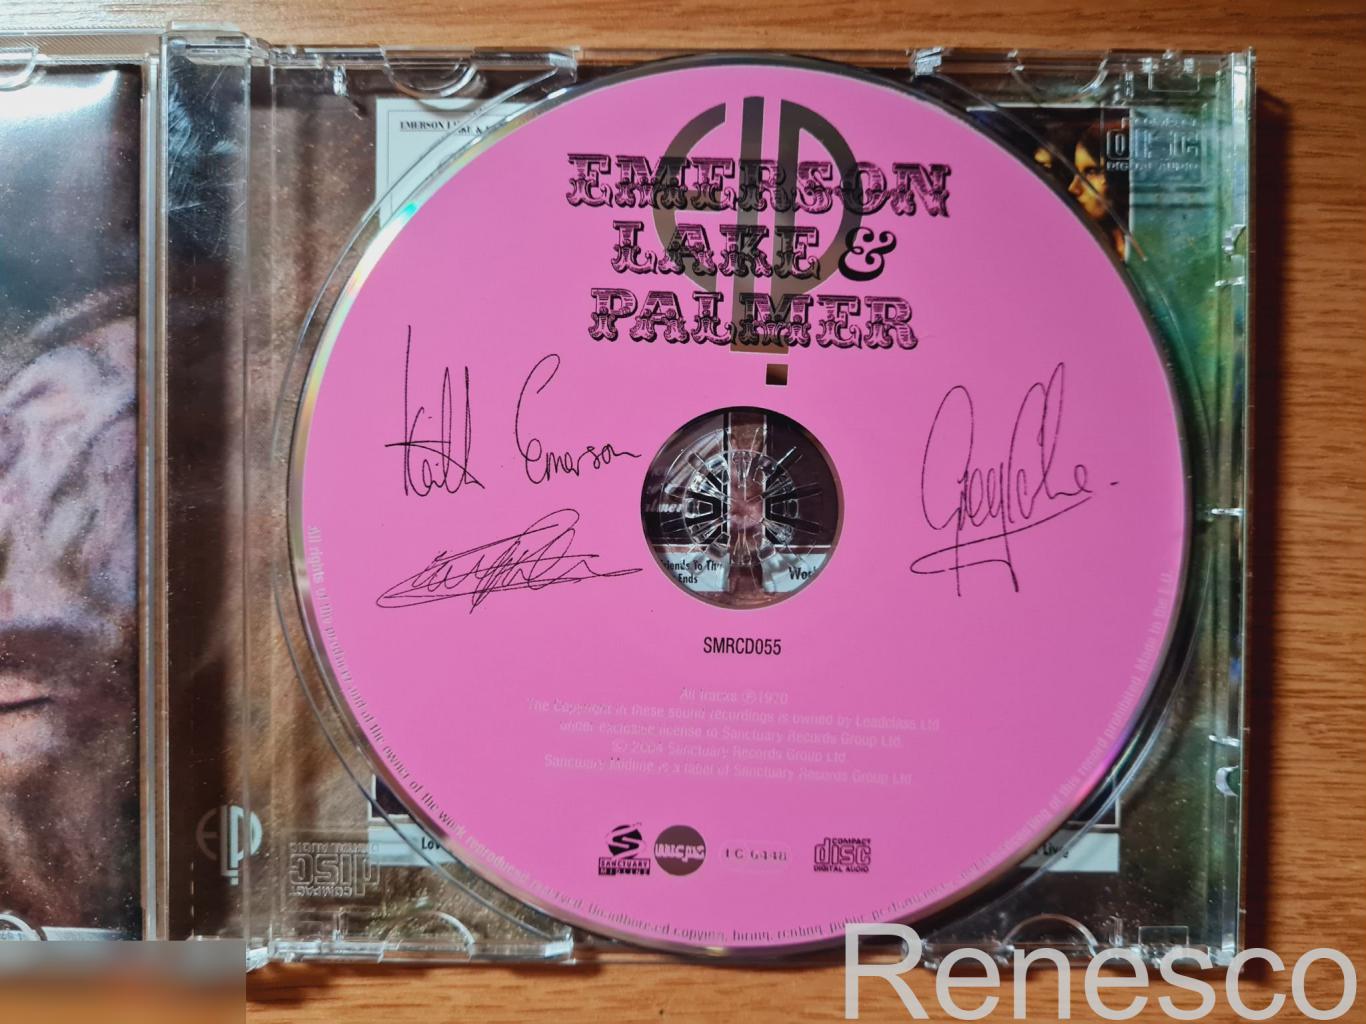 Emerson Lake & Palmer ?– Emerson Lake & Palmer (Germany) (2004) (Reissue) 4